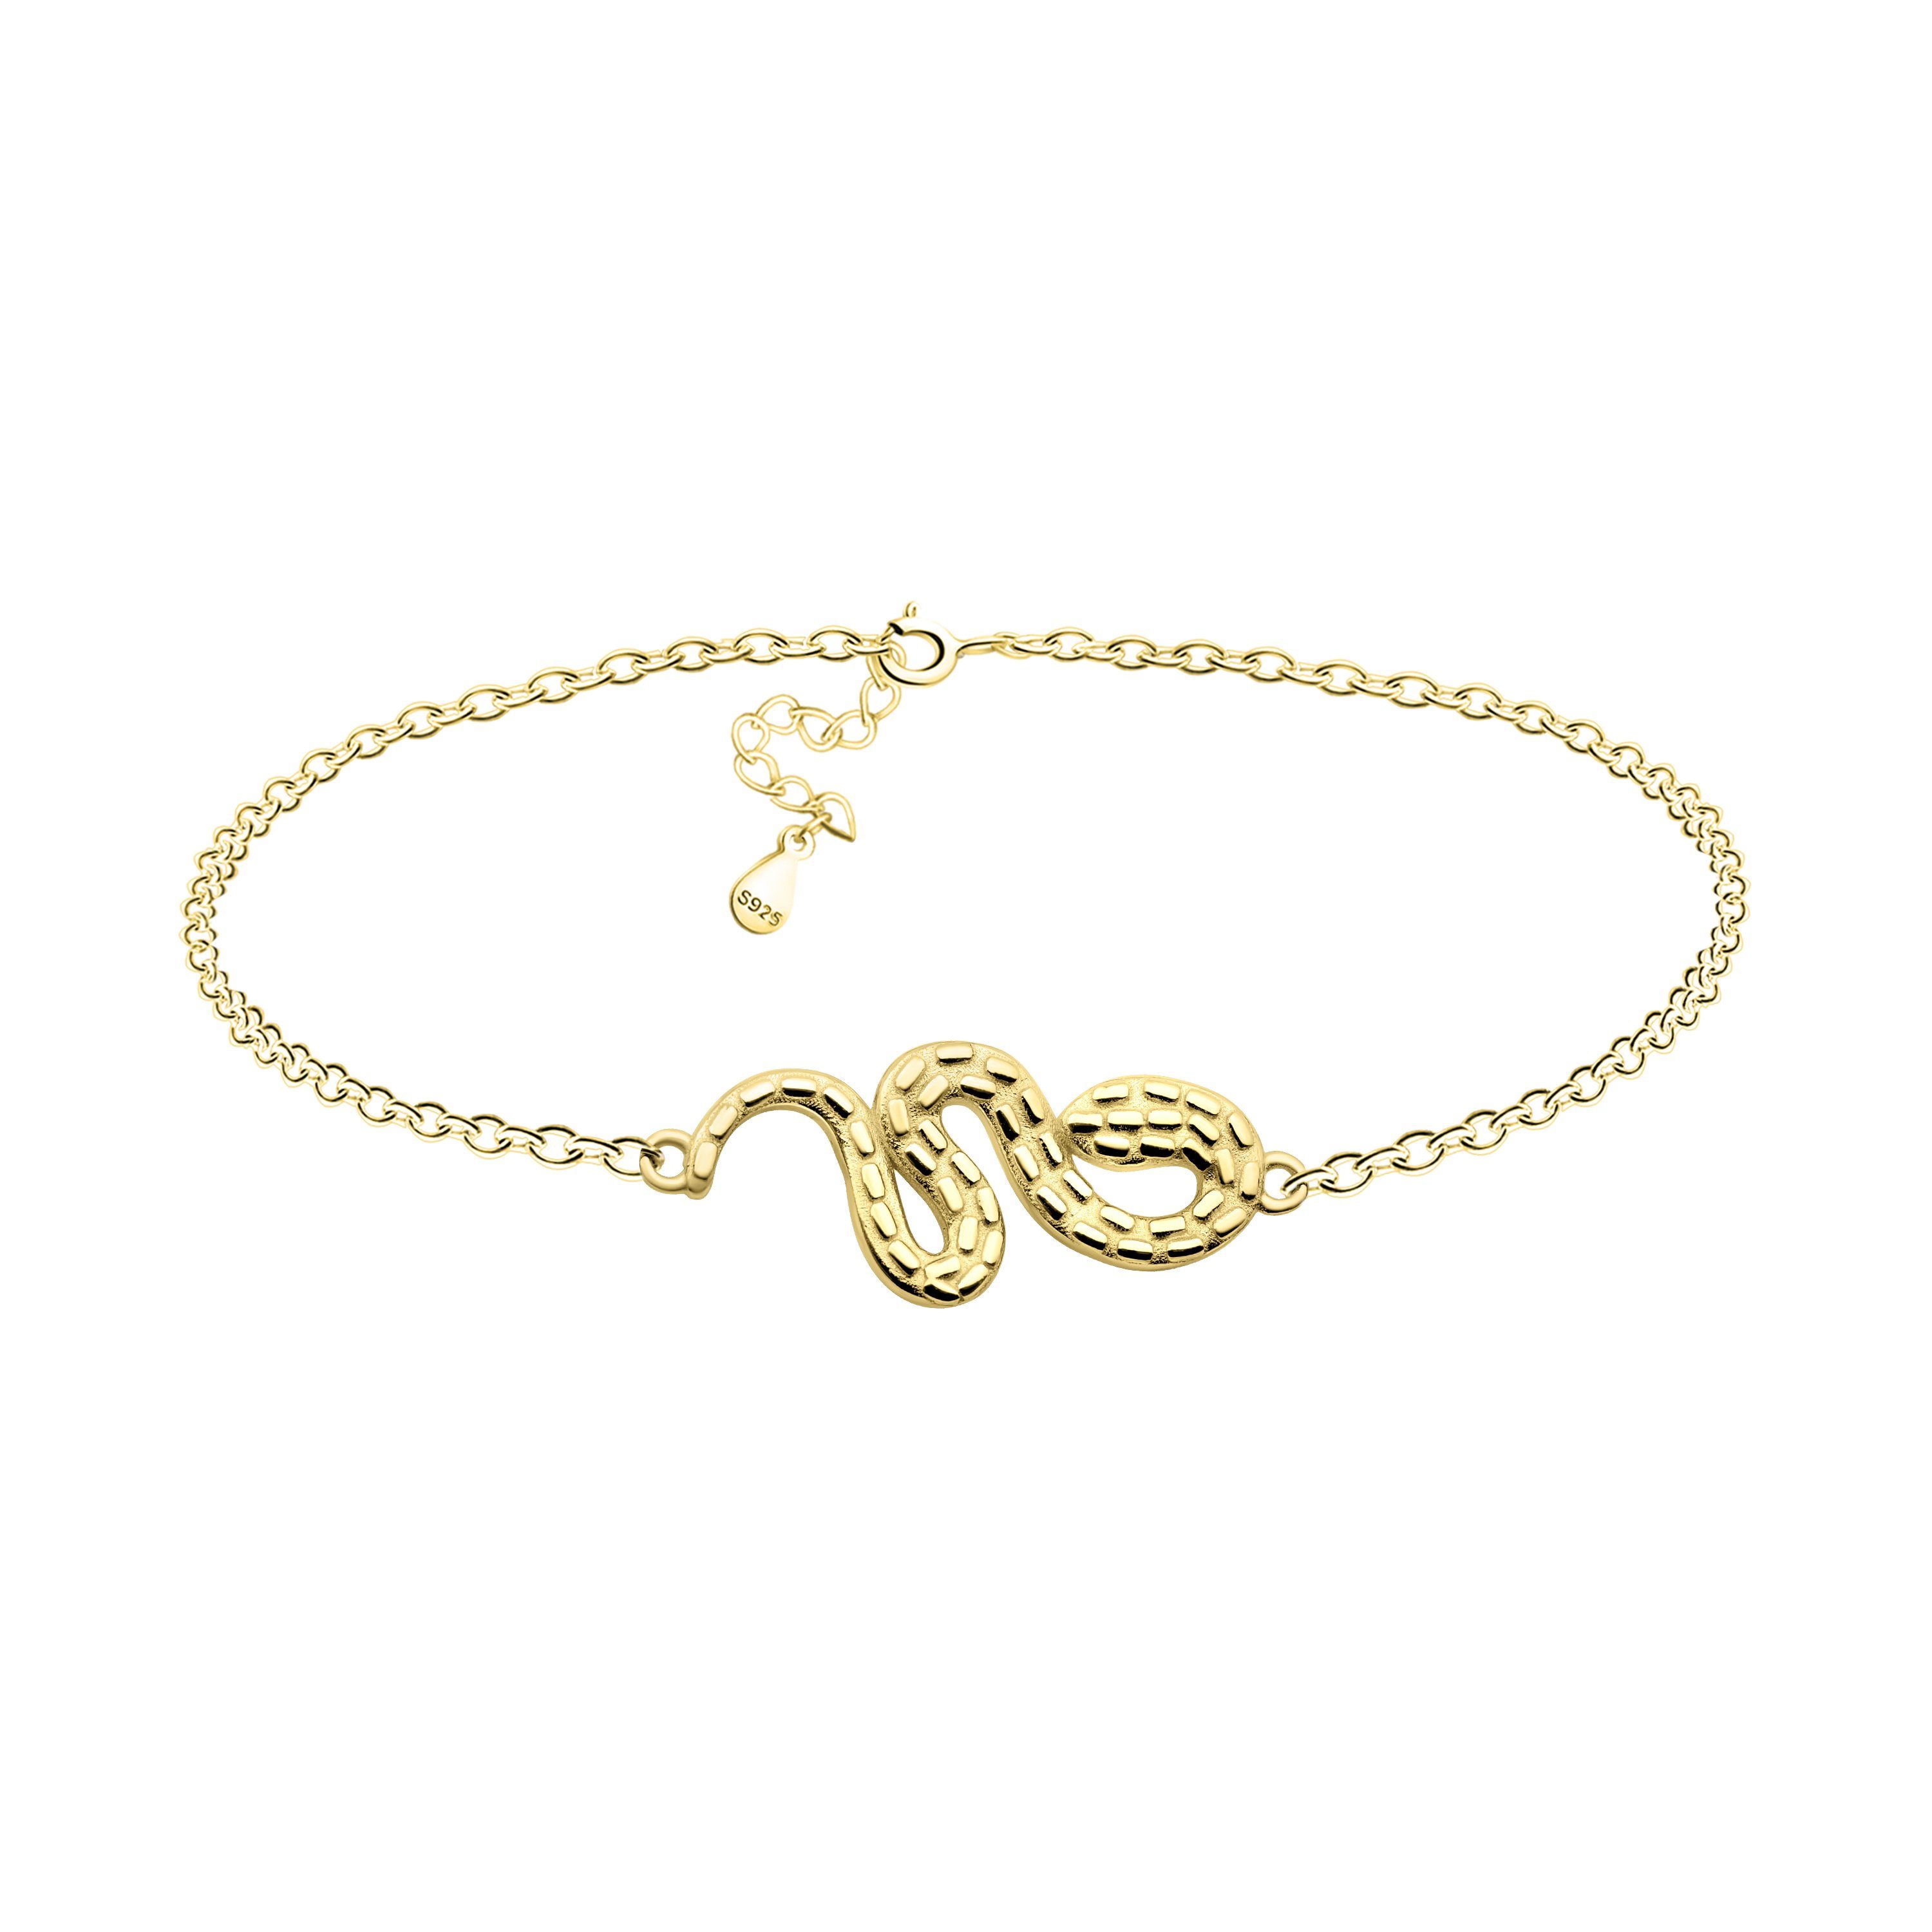 Sofia Milani Armband Schlange (Armband), 925 Silber Damen Schmuck gold